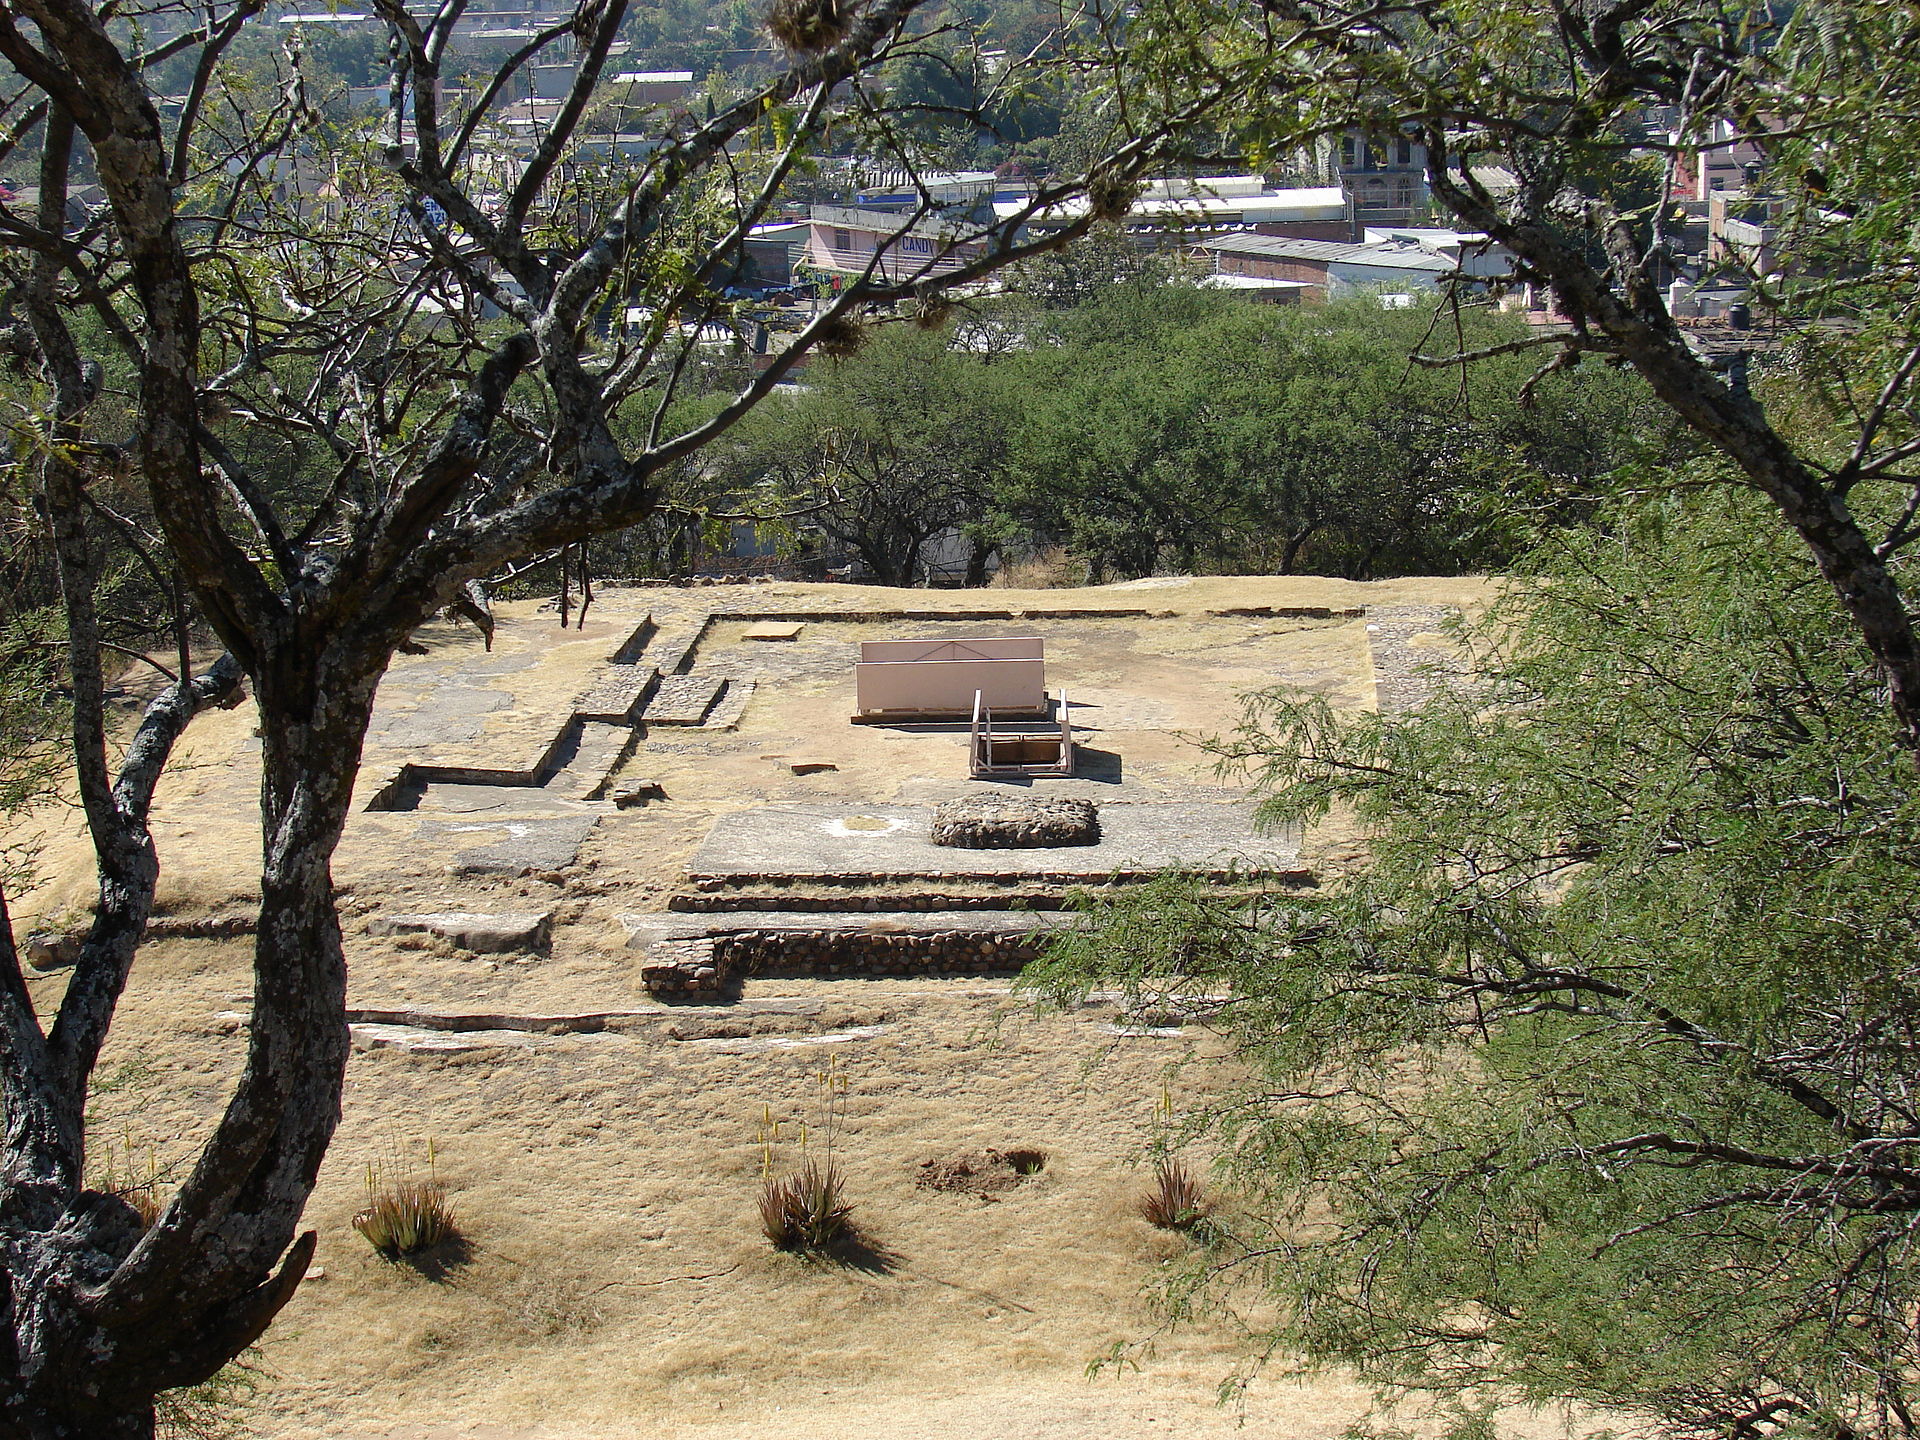 Sitio arqueologico de Zaachila en el estado de Oaxaca